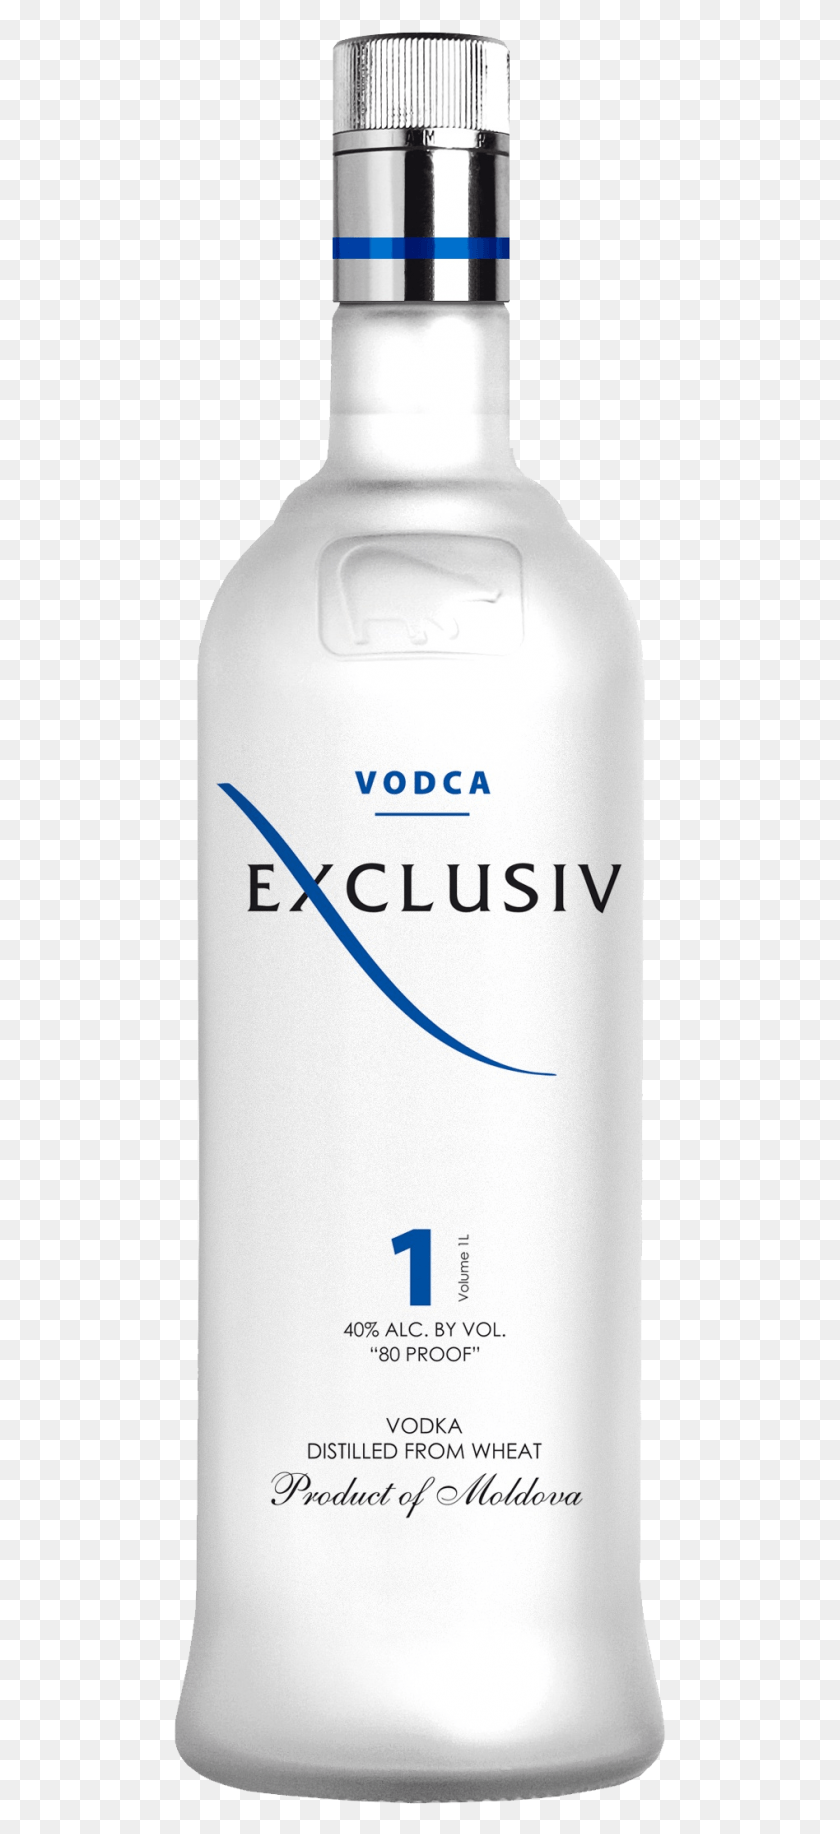 493x1774 Descargar Png / Vodka Free Exclusiv Vodka Bottle, Tin, Can, Aluminio Hd Png